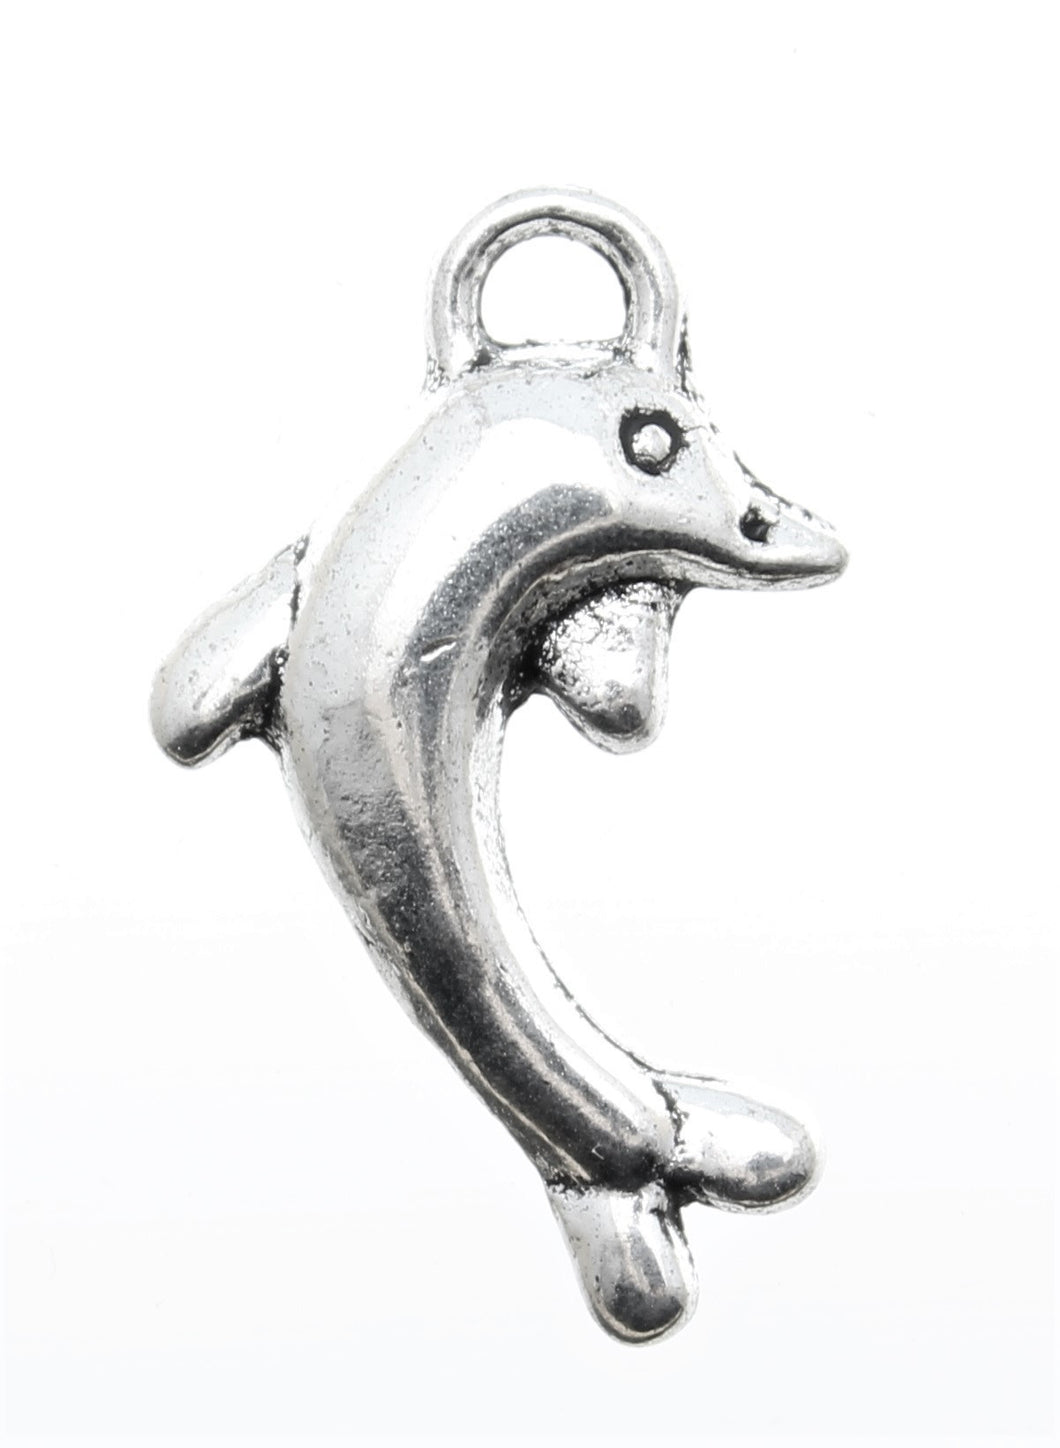 AVBeads Beach Charms Dolphin Charms Silver 19mm x 11mm Metal Charms 10pcs